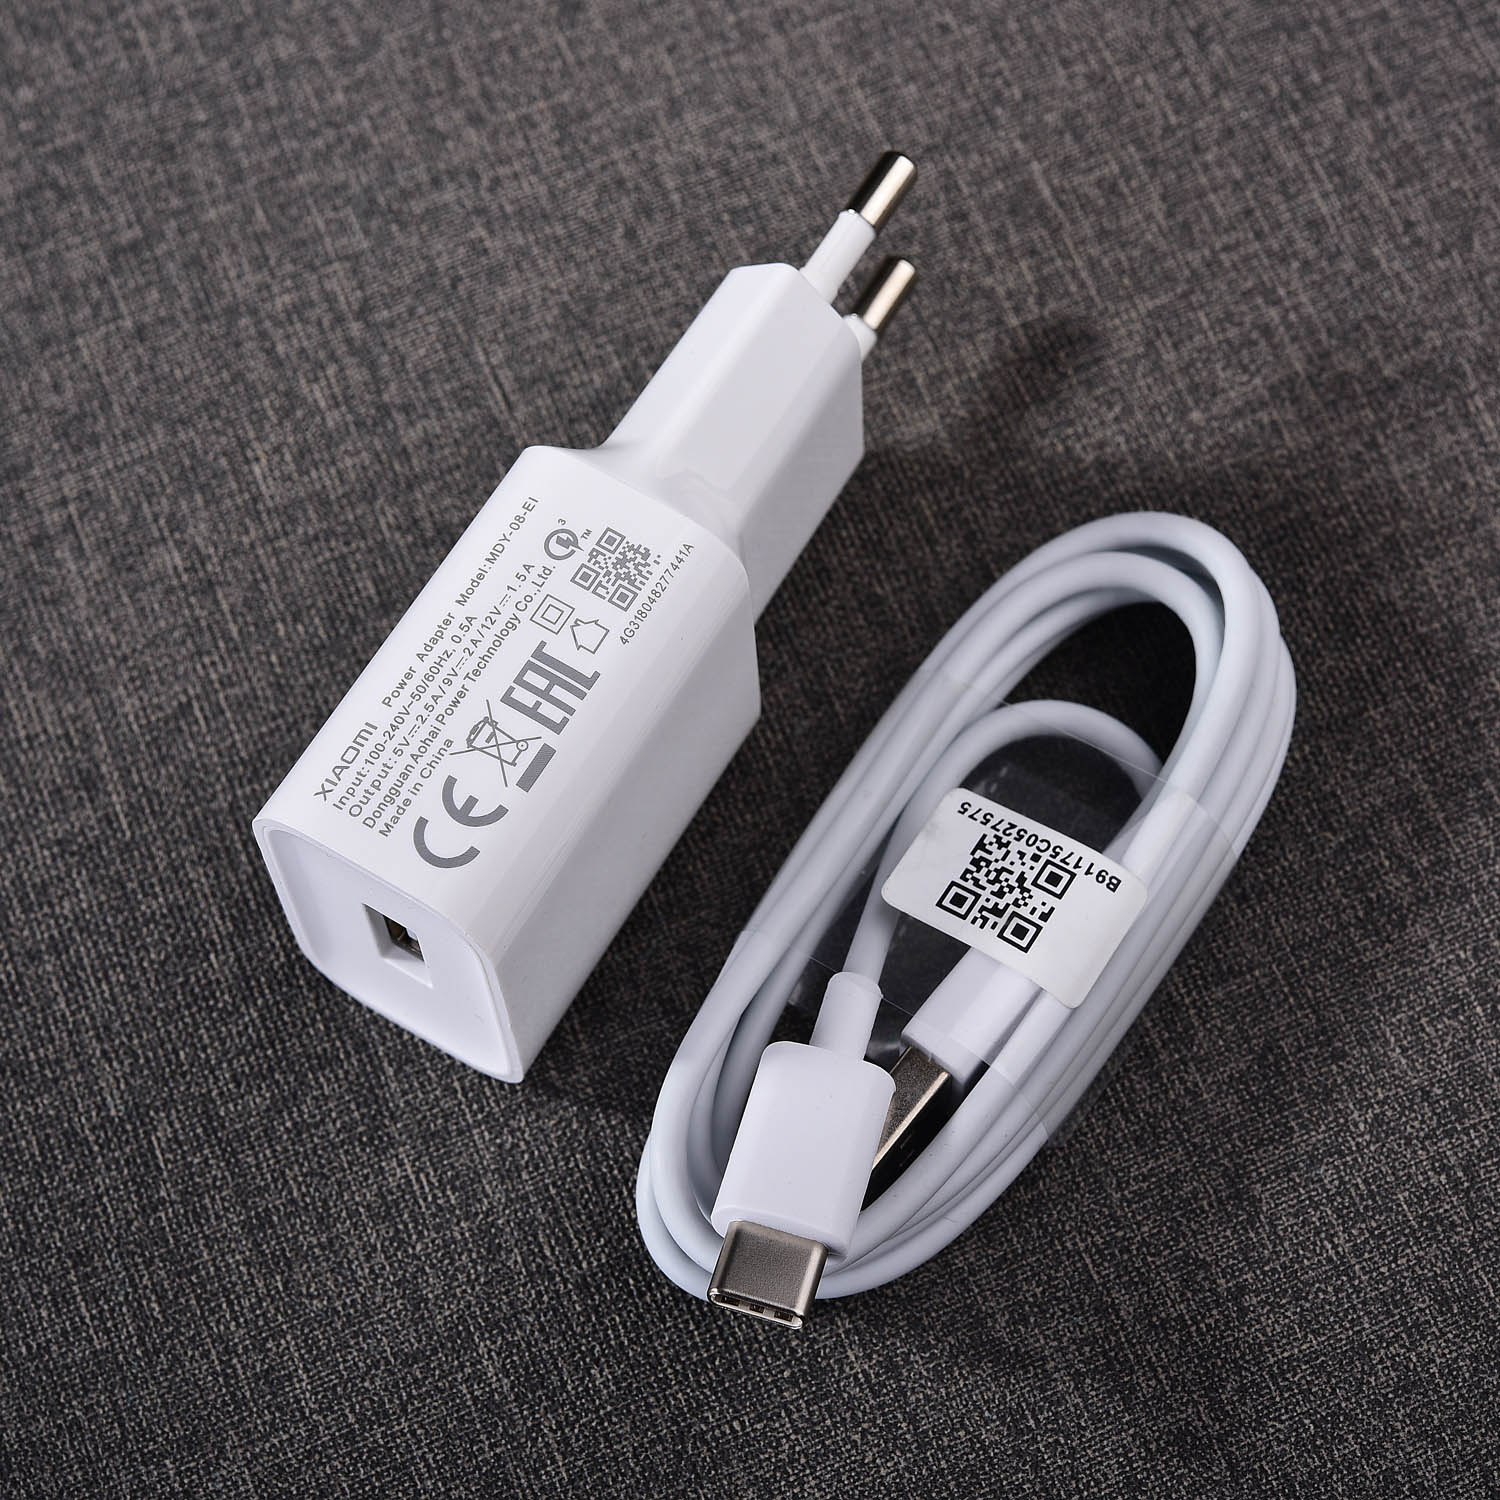 Originele Xiao Mi Fast Charger 18W Usb Quick Adapter 100 Cm TYPE-C Kabel Voor Mi 6 8 9 10 rode Mi Note 7 8 Pro A2 A3 Lite F1 MDY-08-EI: White Set